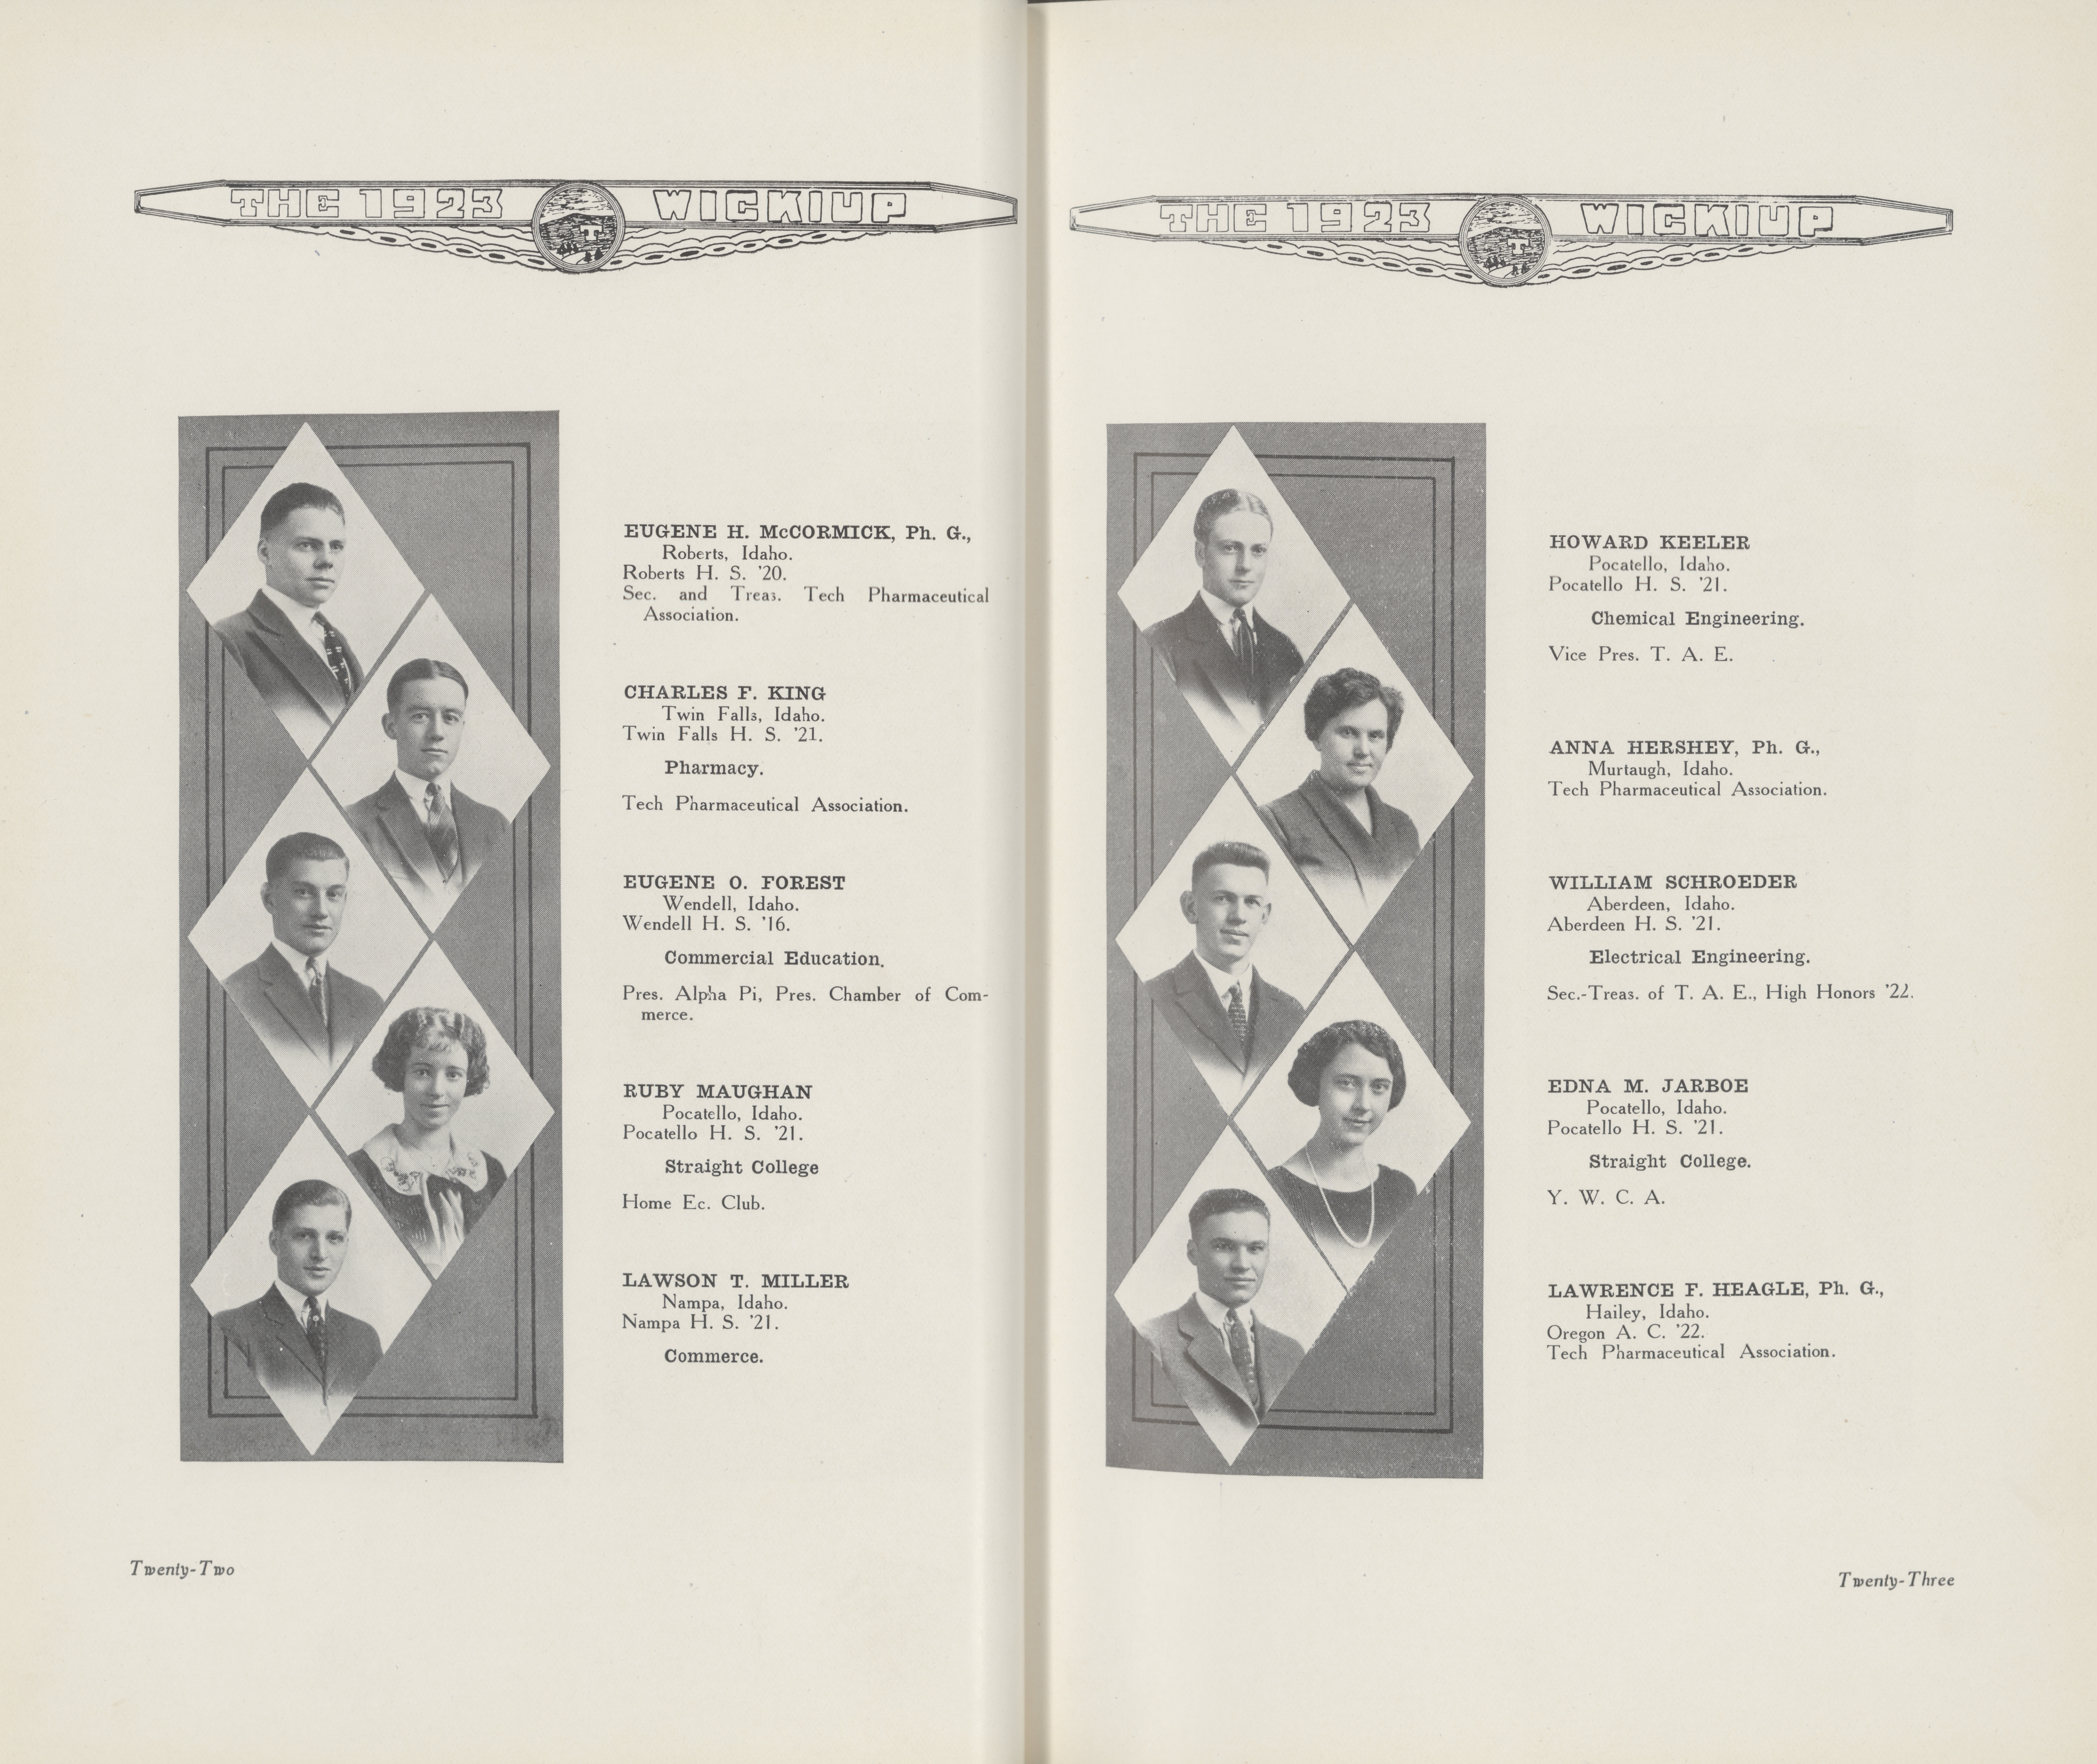 1923 Wickiup photo of pharmacy students